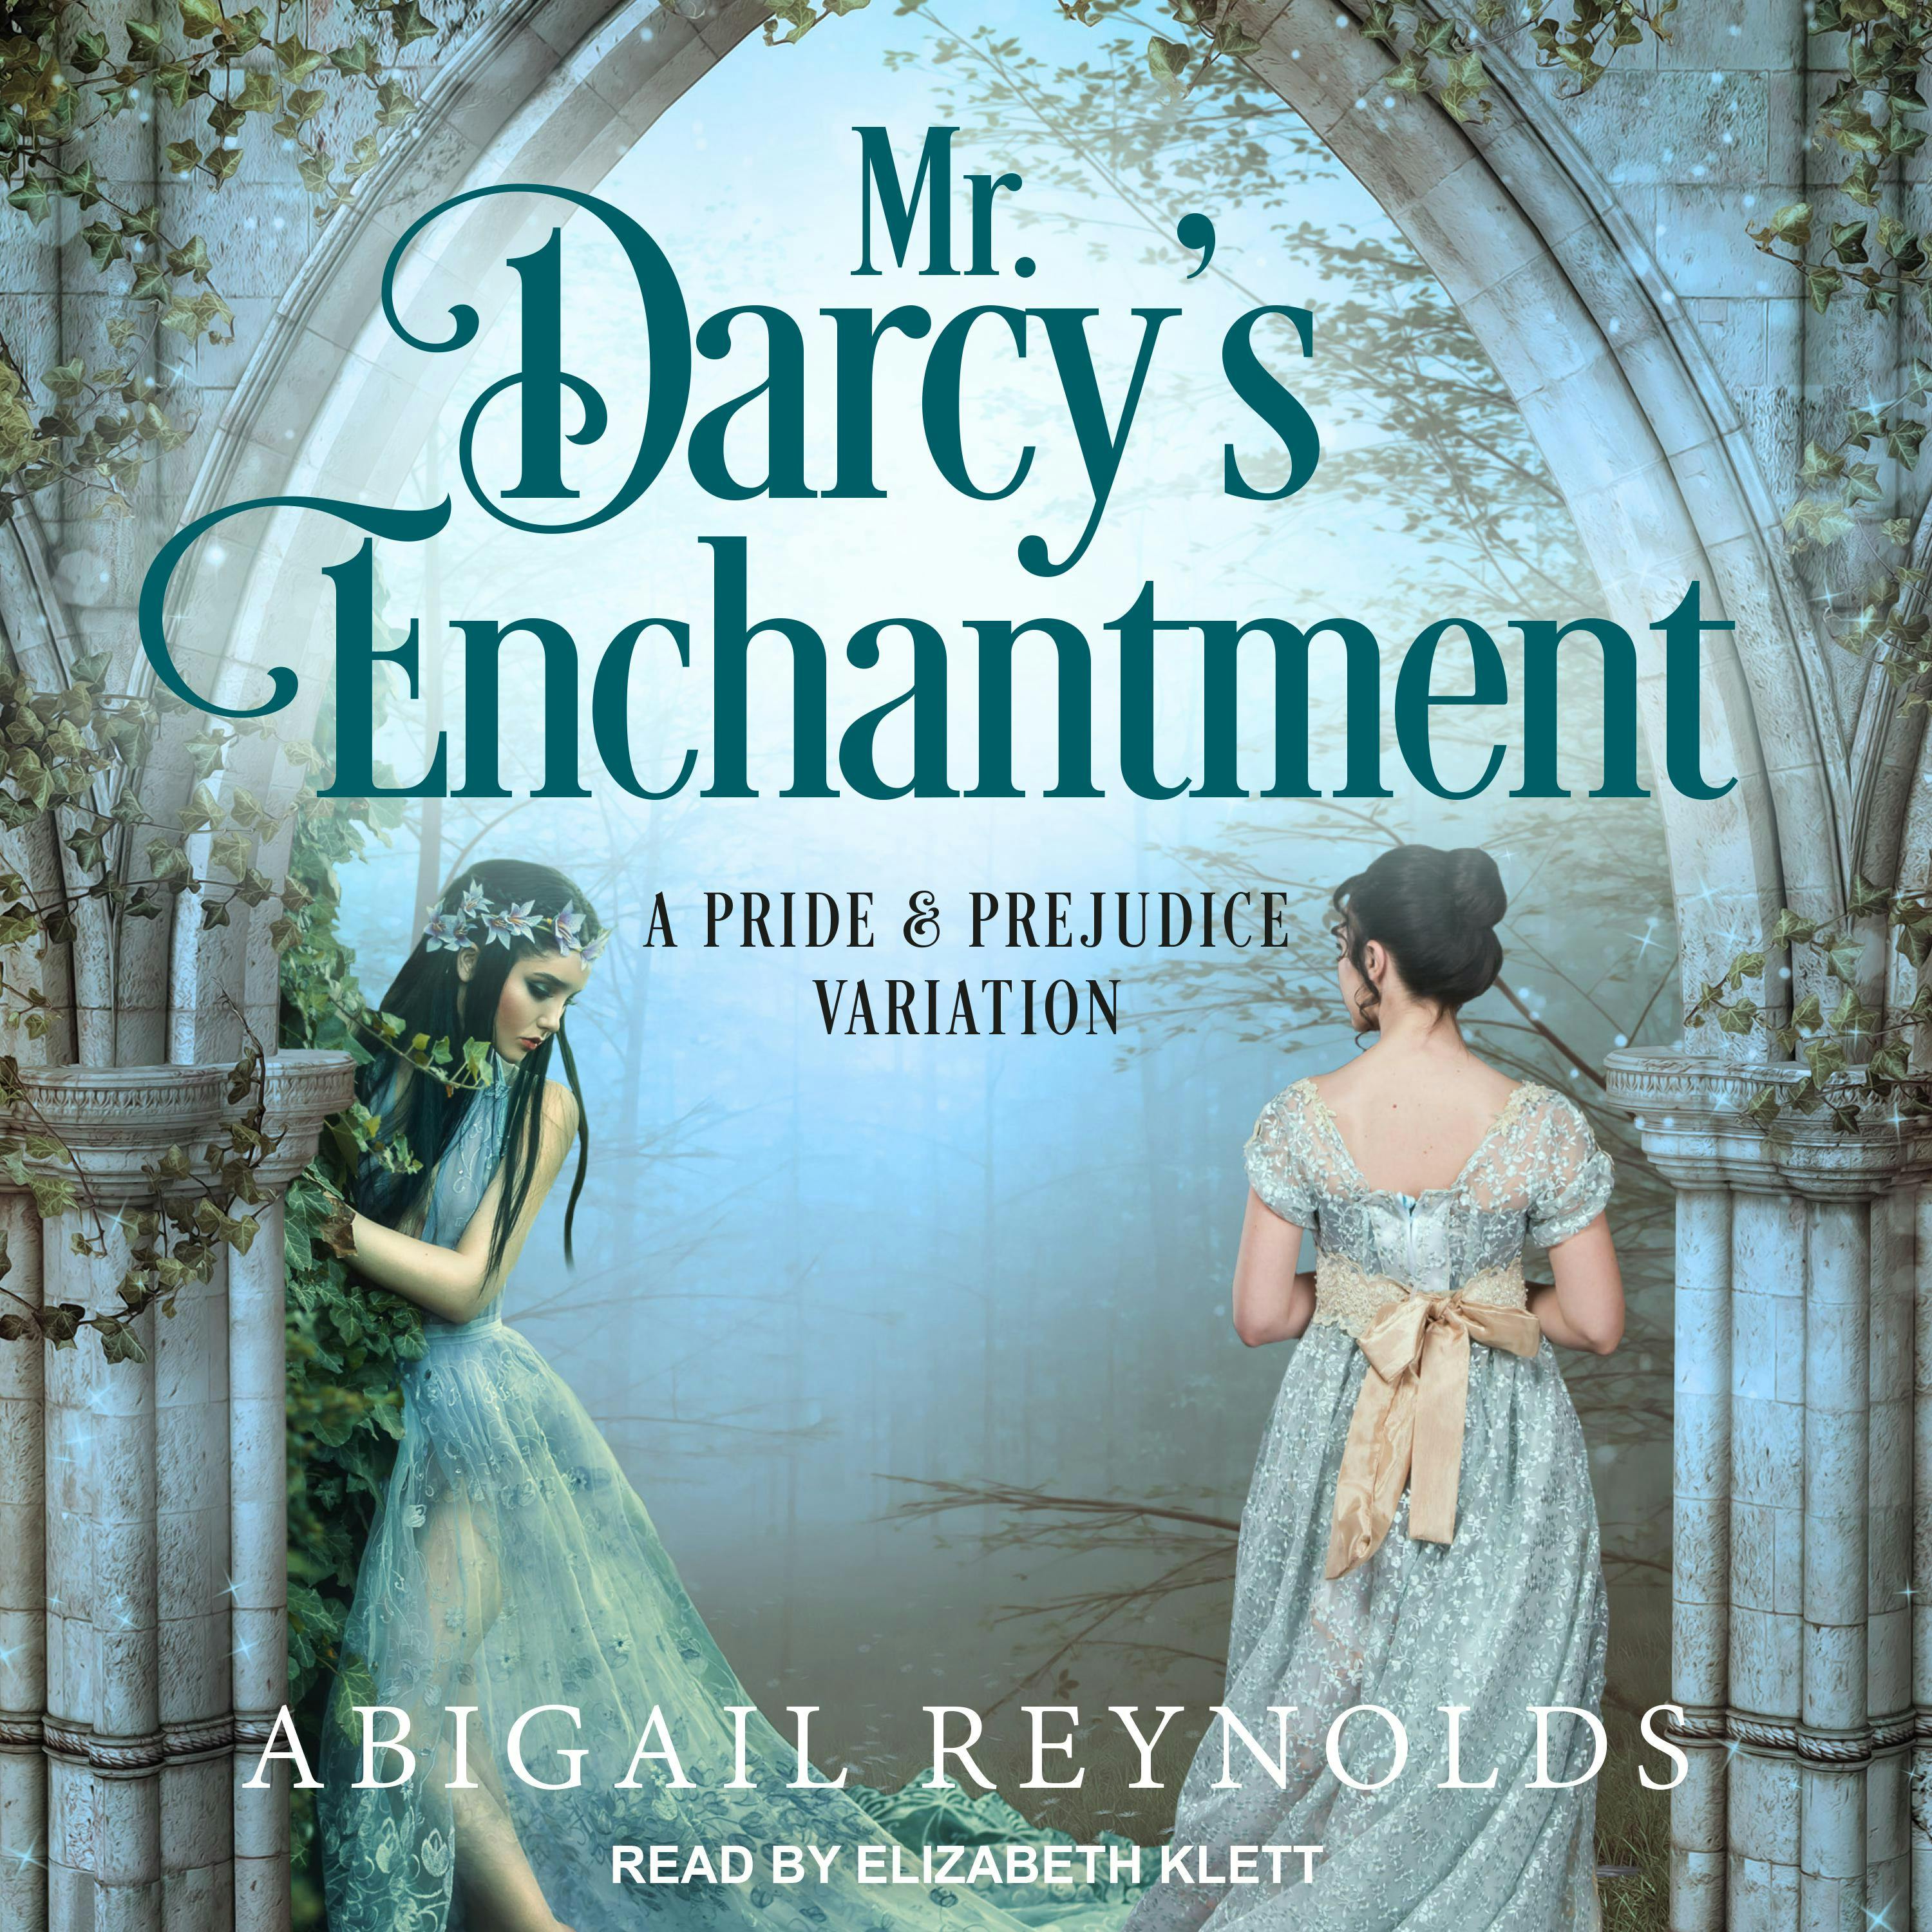 Mr. Darcy's Enchantment: A Pride & Prejudice Variation - Abigail Reynolds